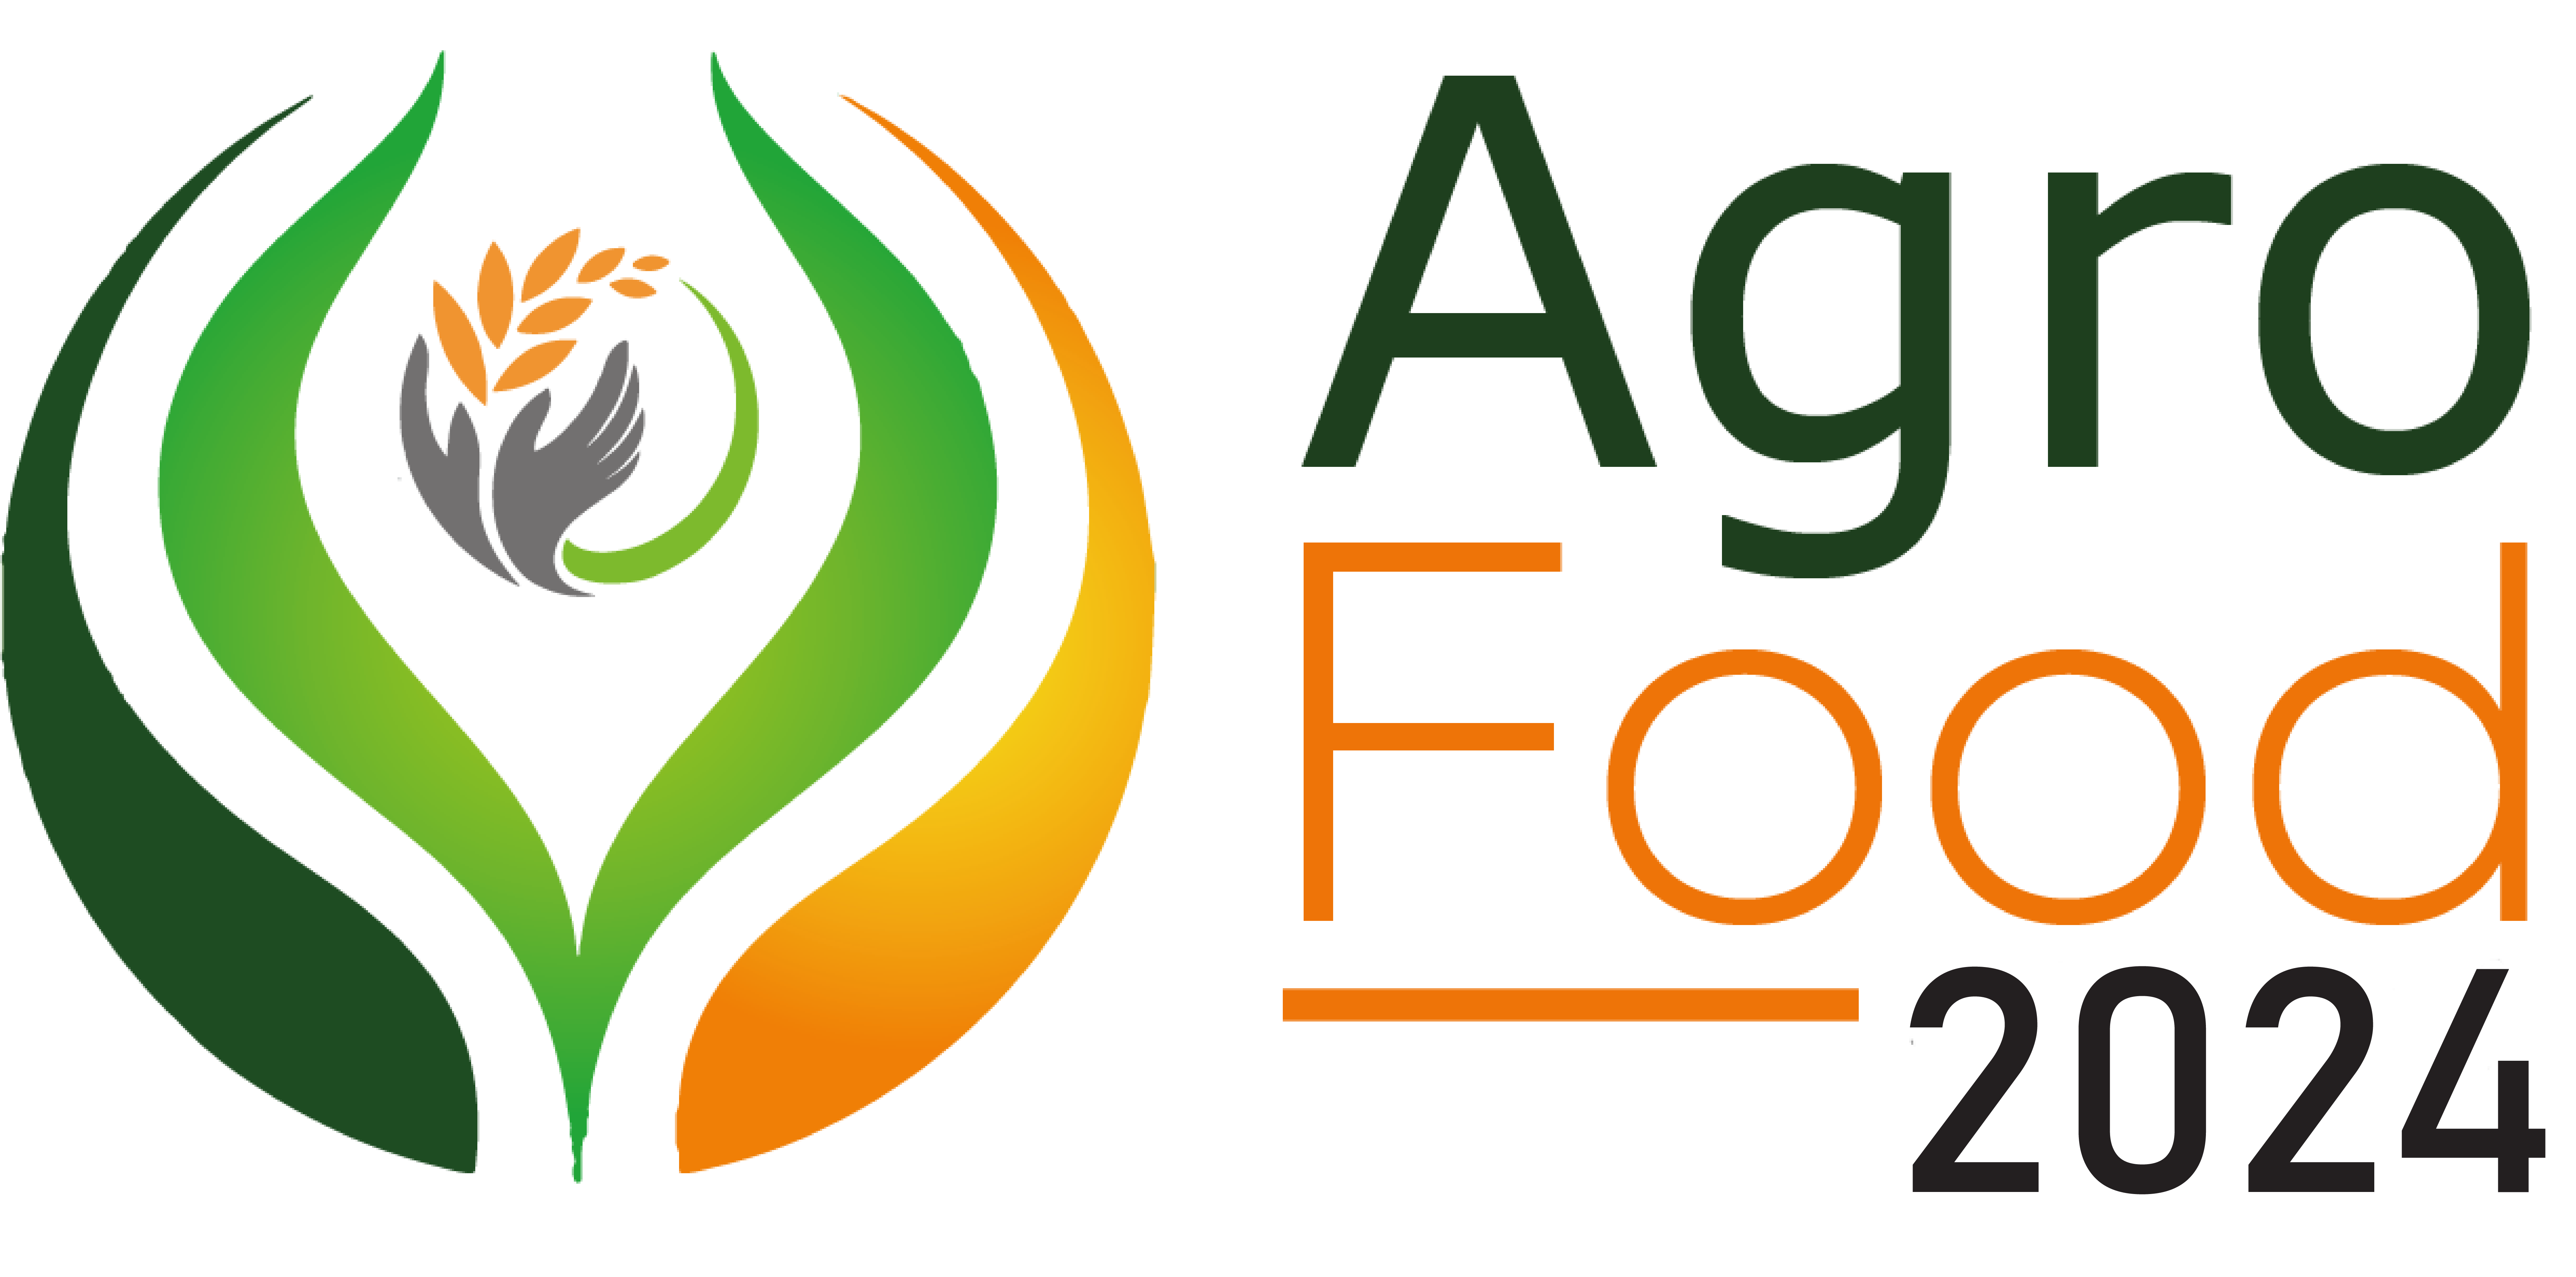 Agro food 2024 logo